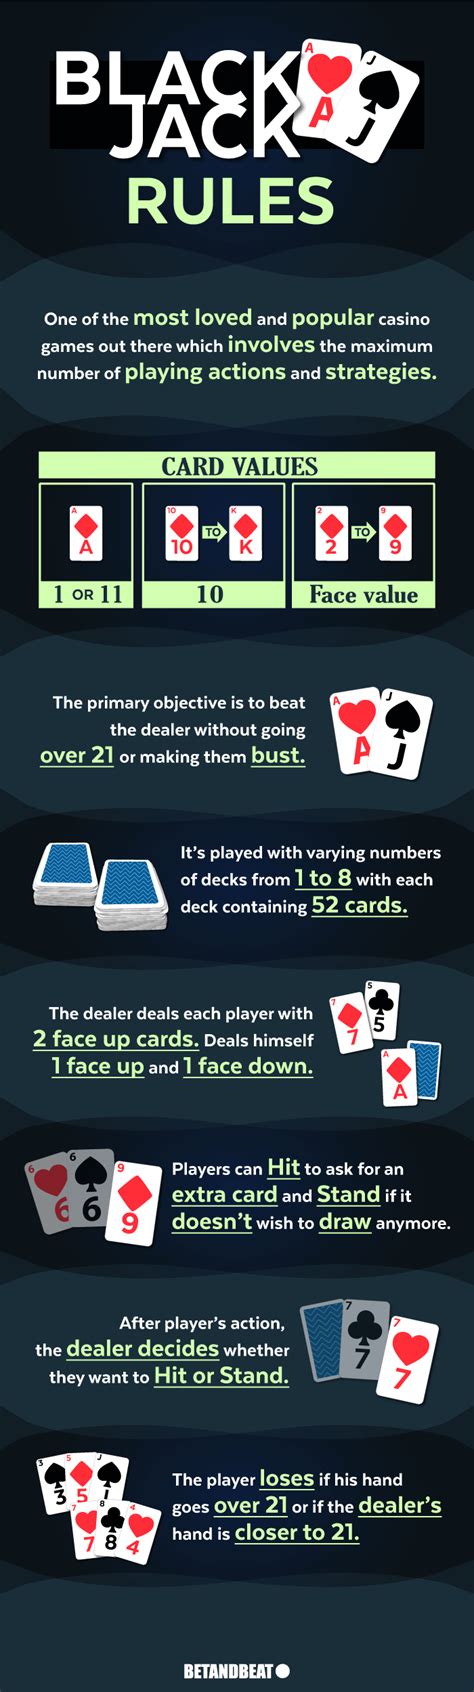 blackjack deck rules wwkr canada